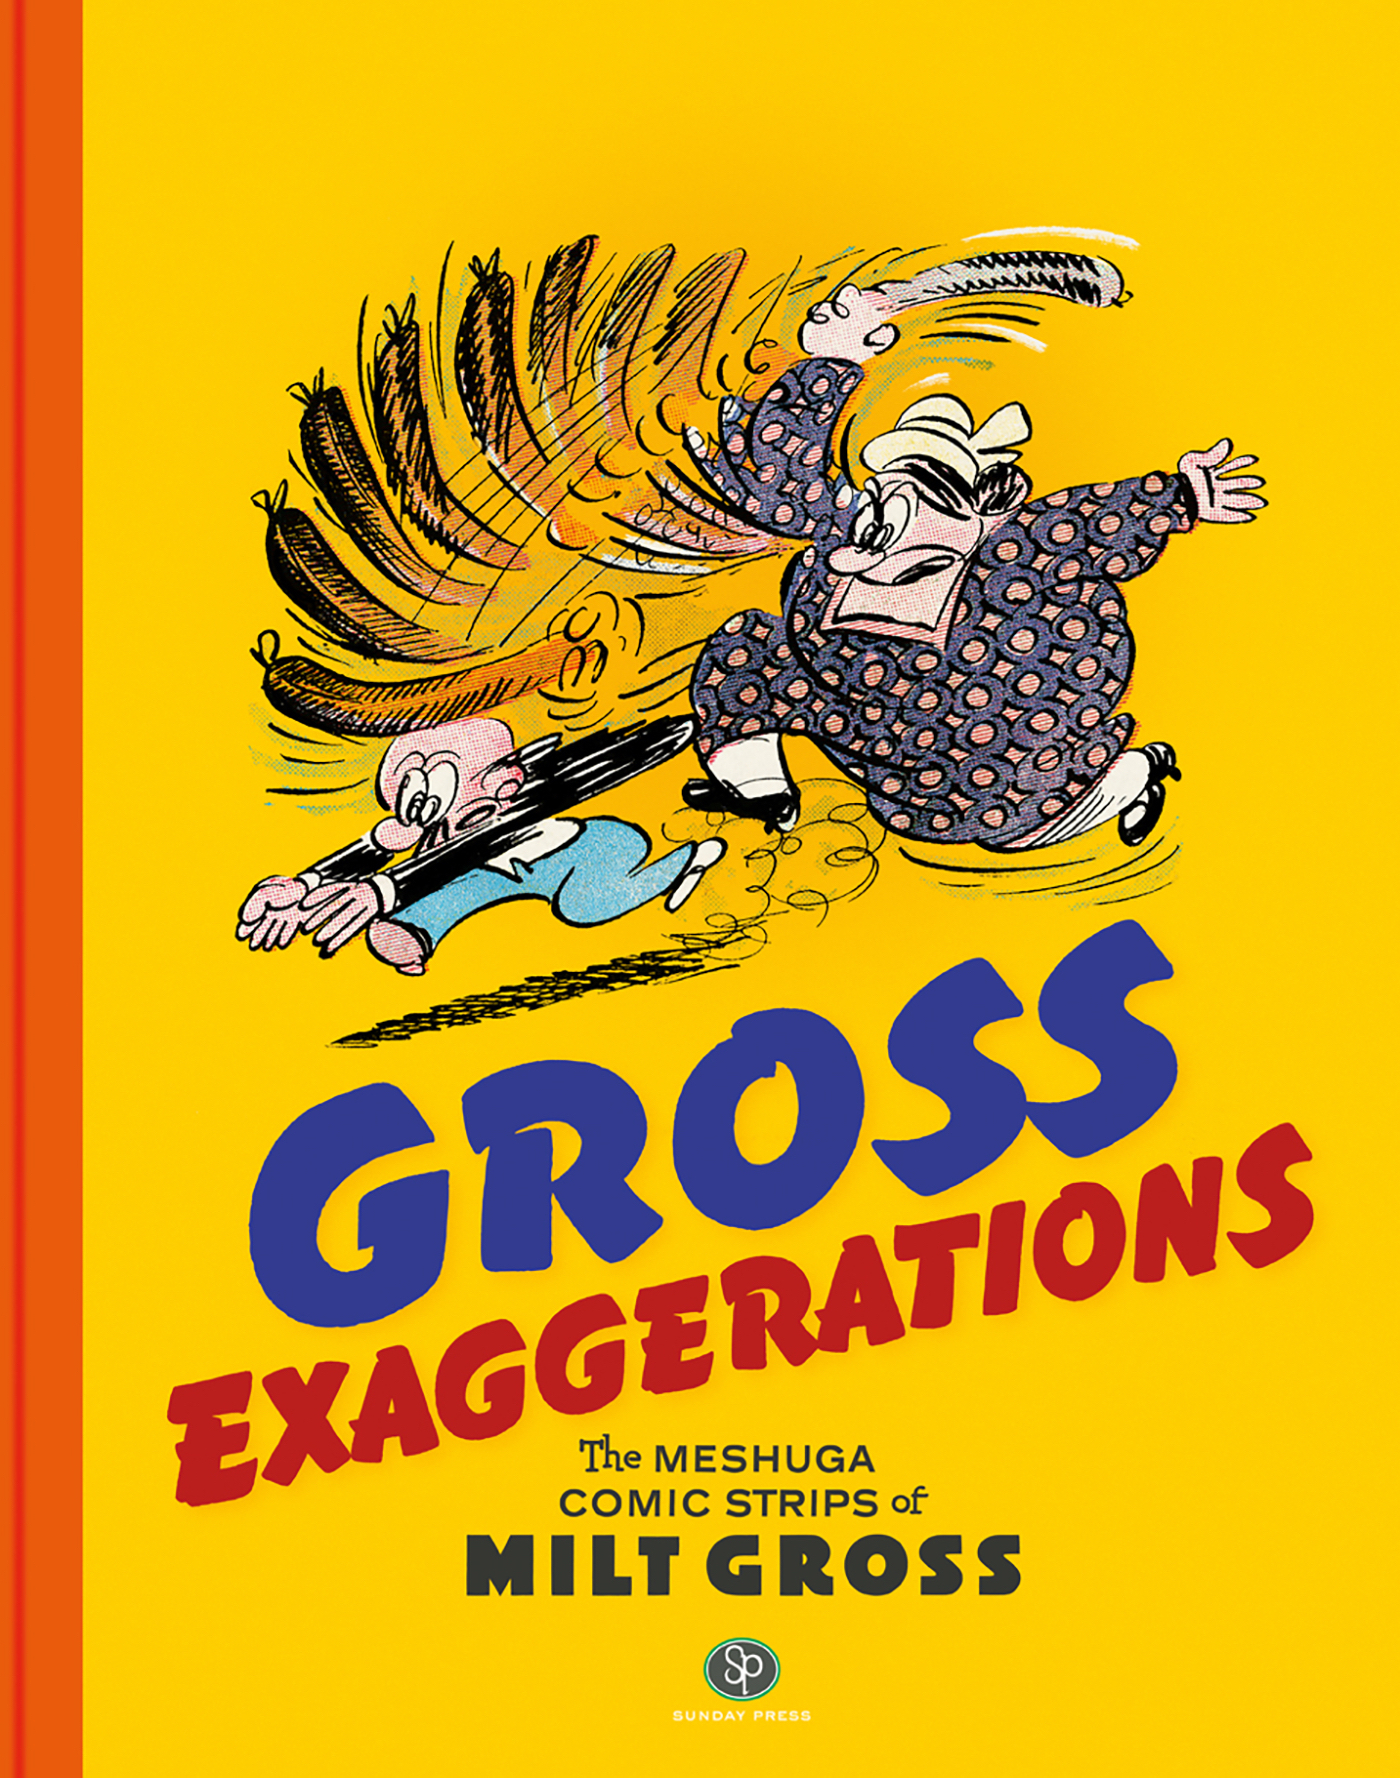 Gross Exaggerations Meshuga Comics Milet Gross Hardcover